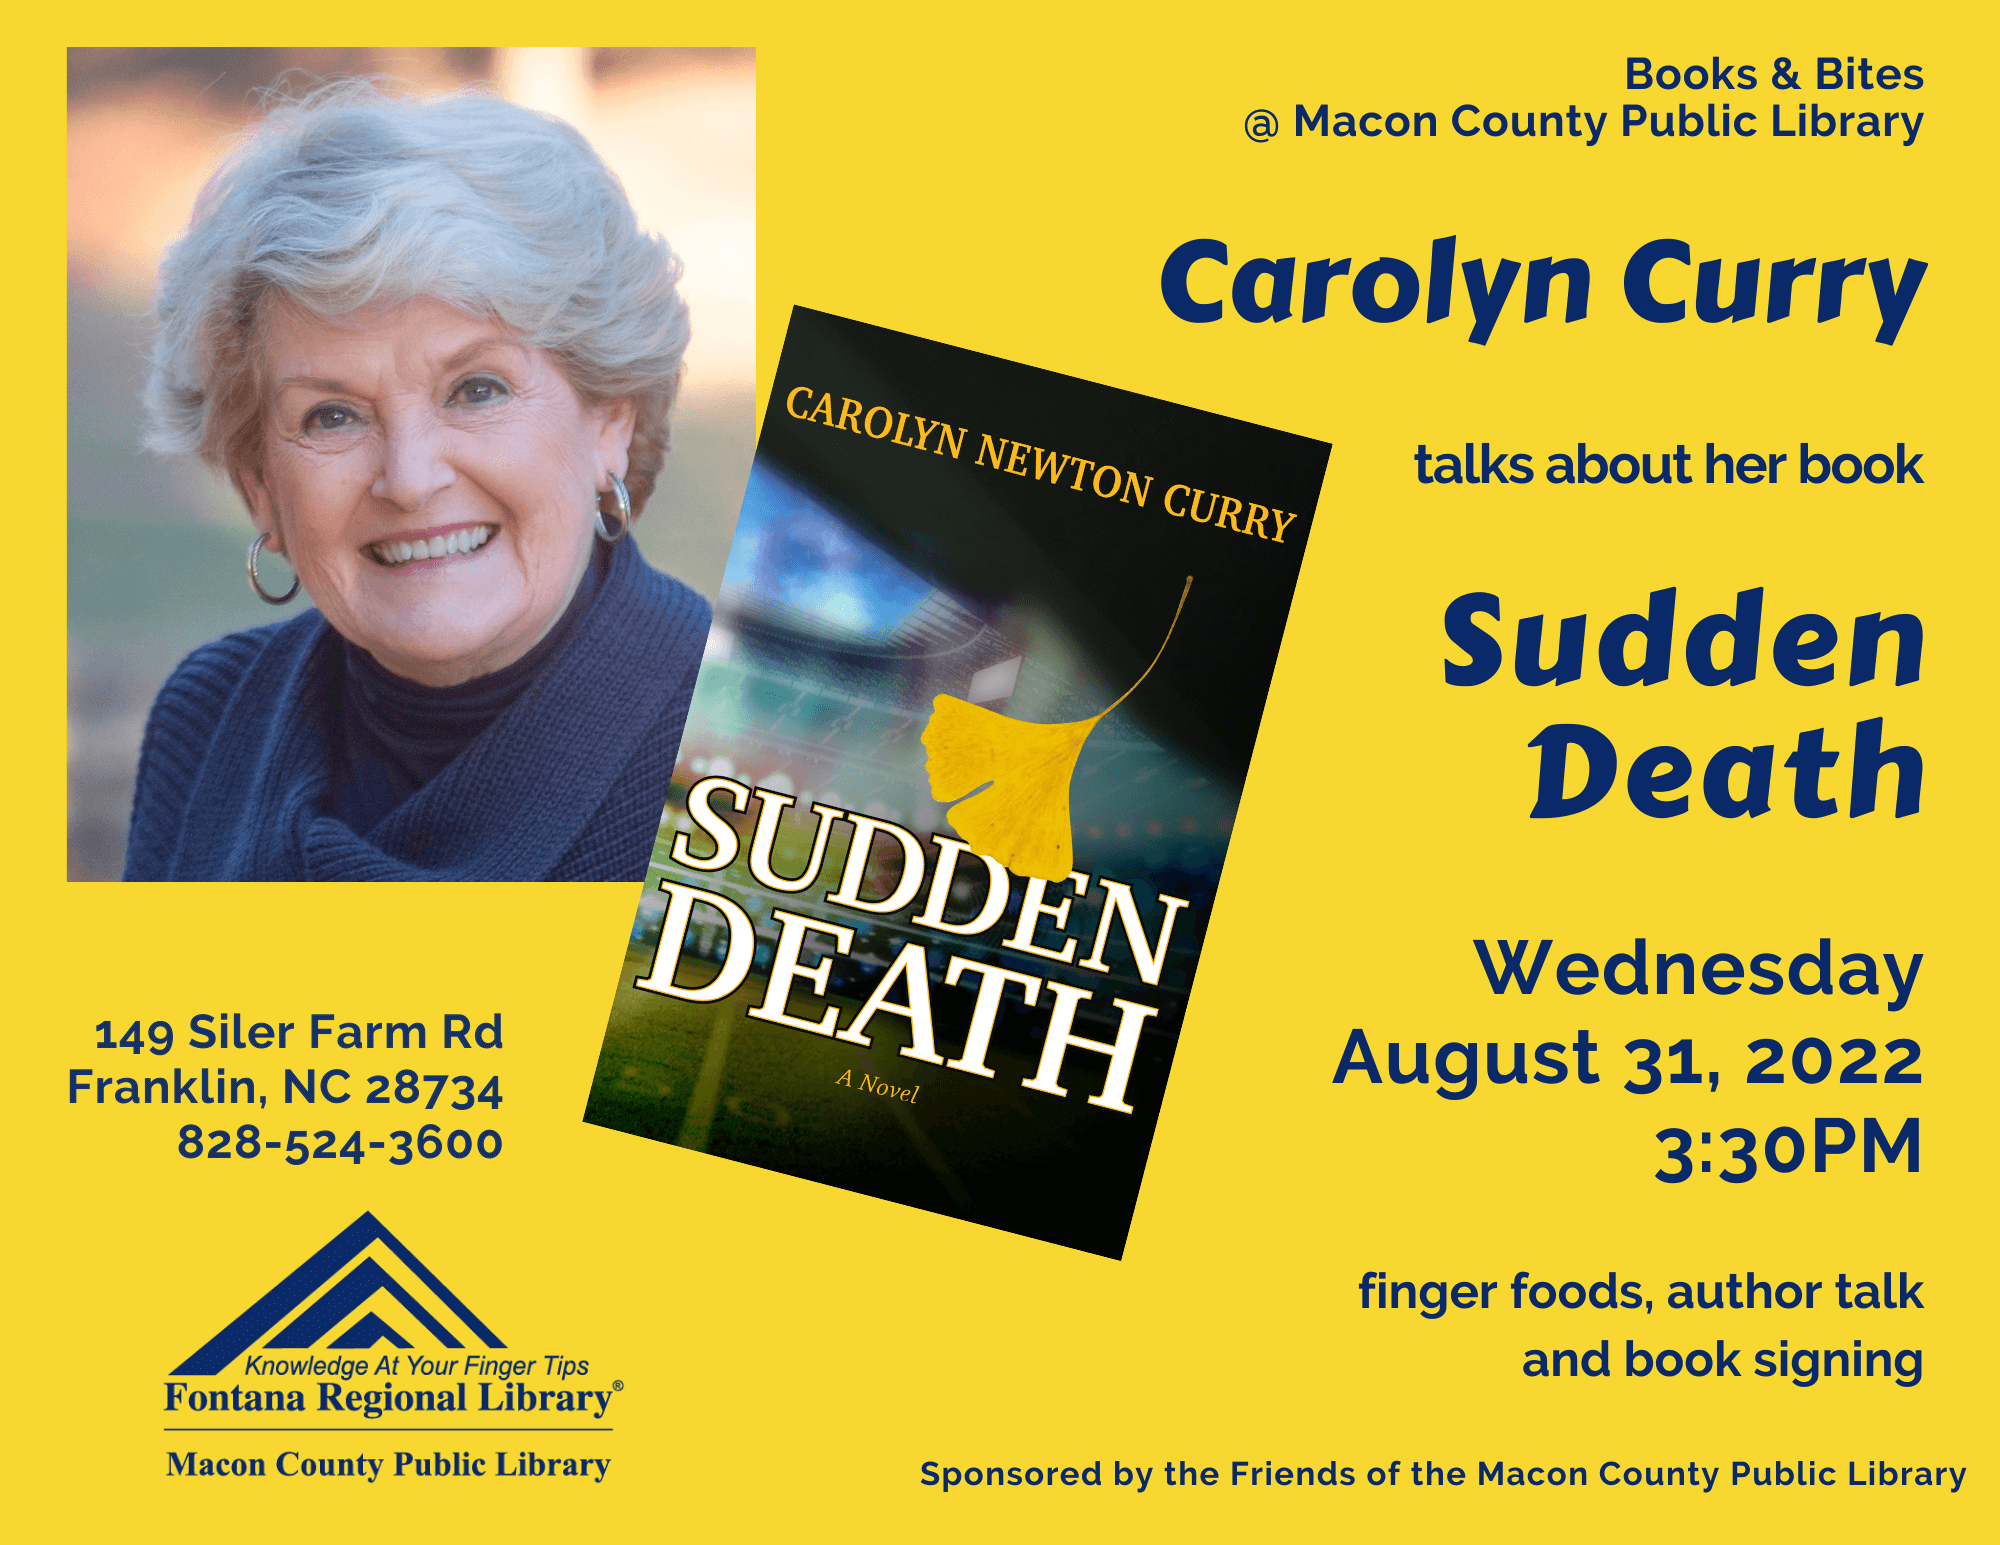 Books & Bites presents Carolyn Curry